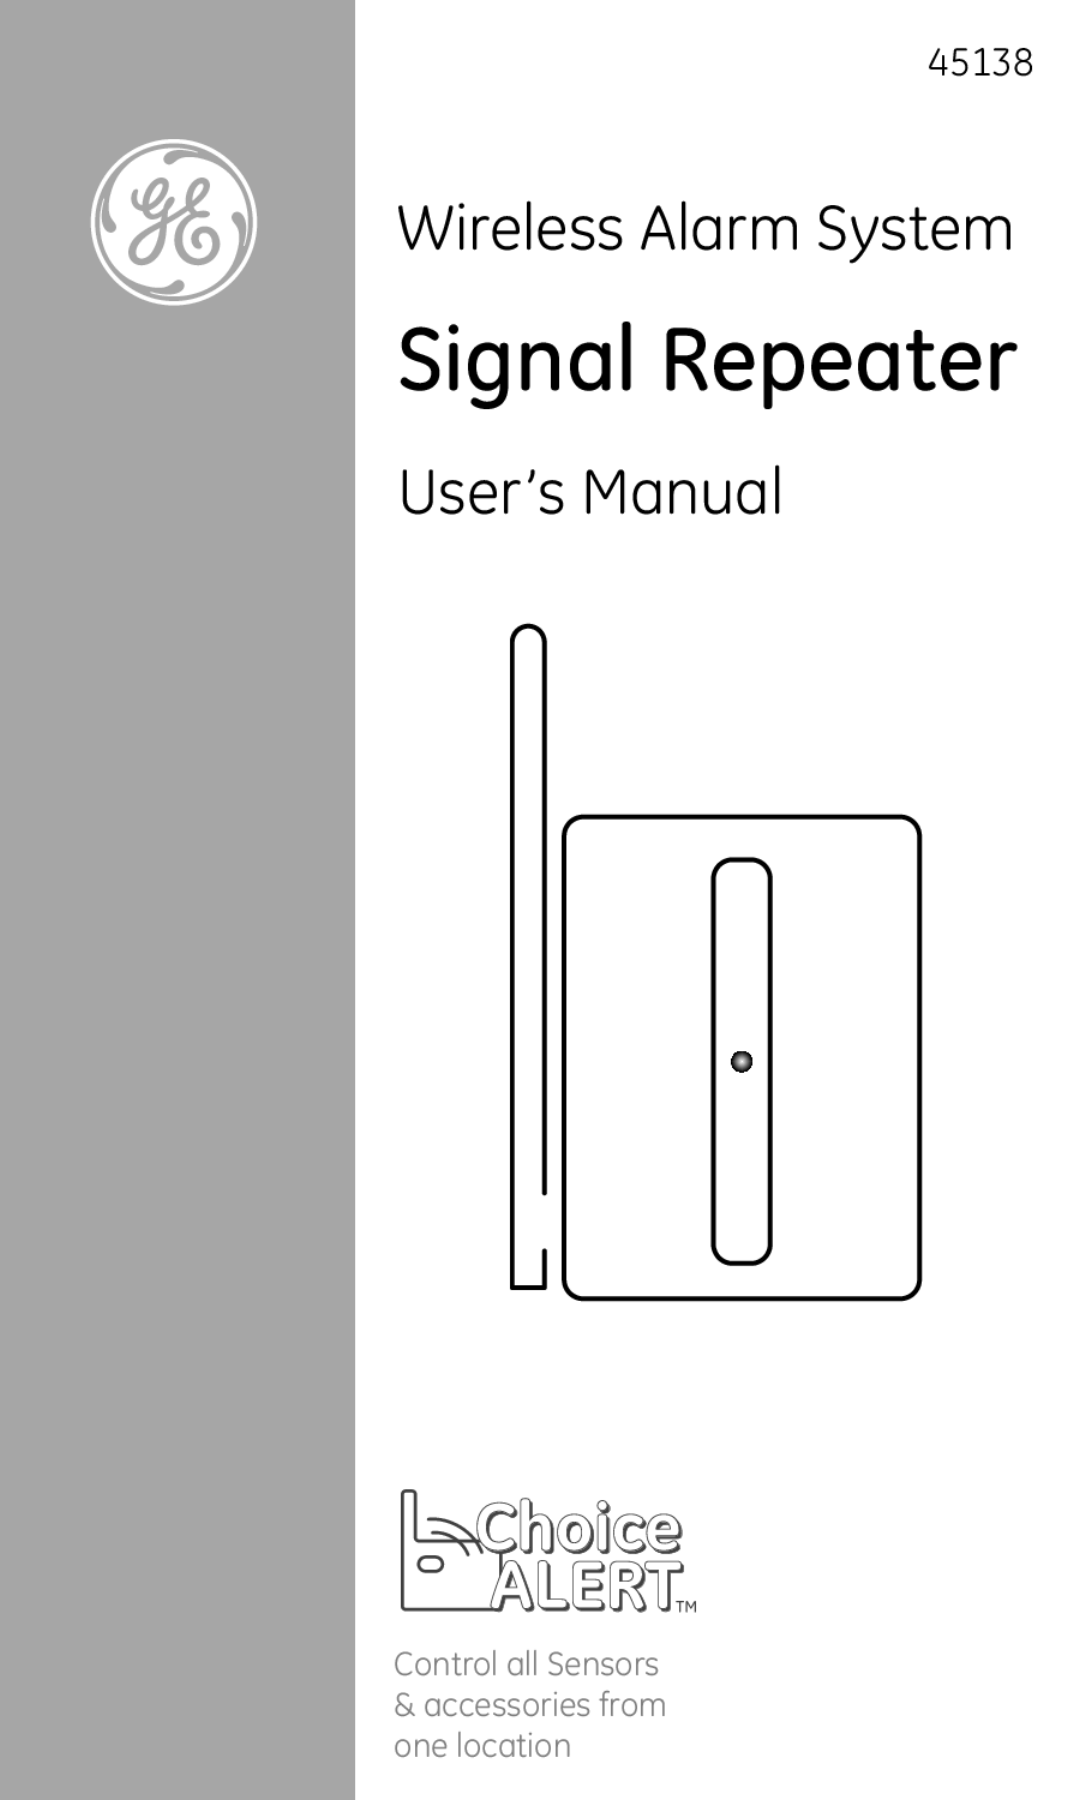 GE 45138 user manual Signal Repeater, Choice ALERT, Wireless Alarm System, Control all Sensors 